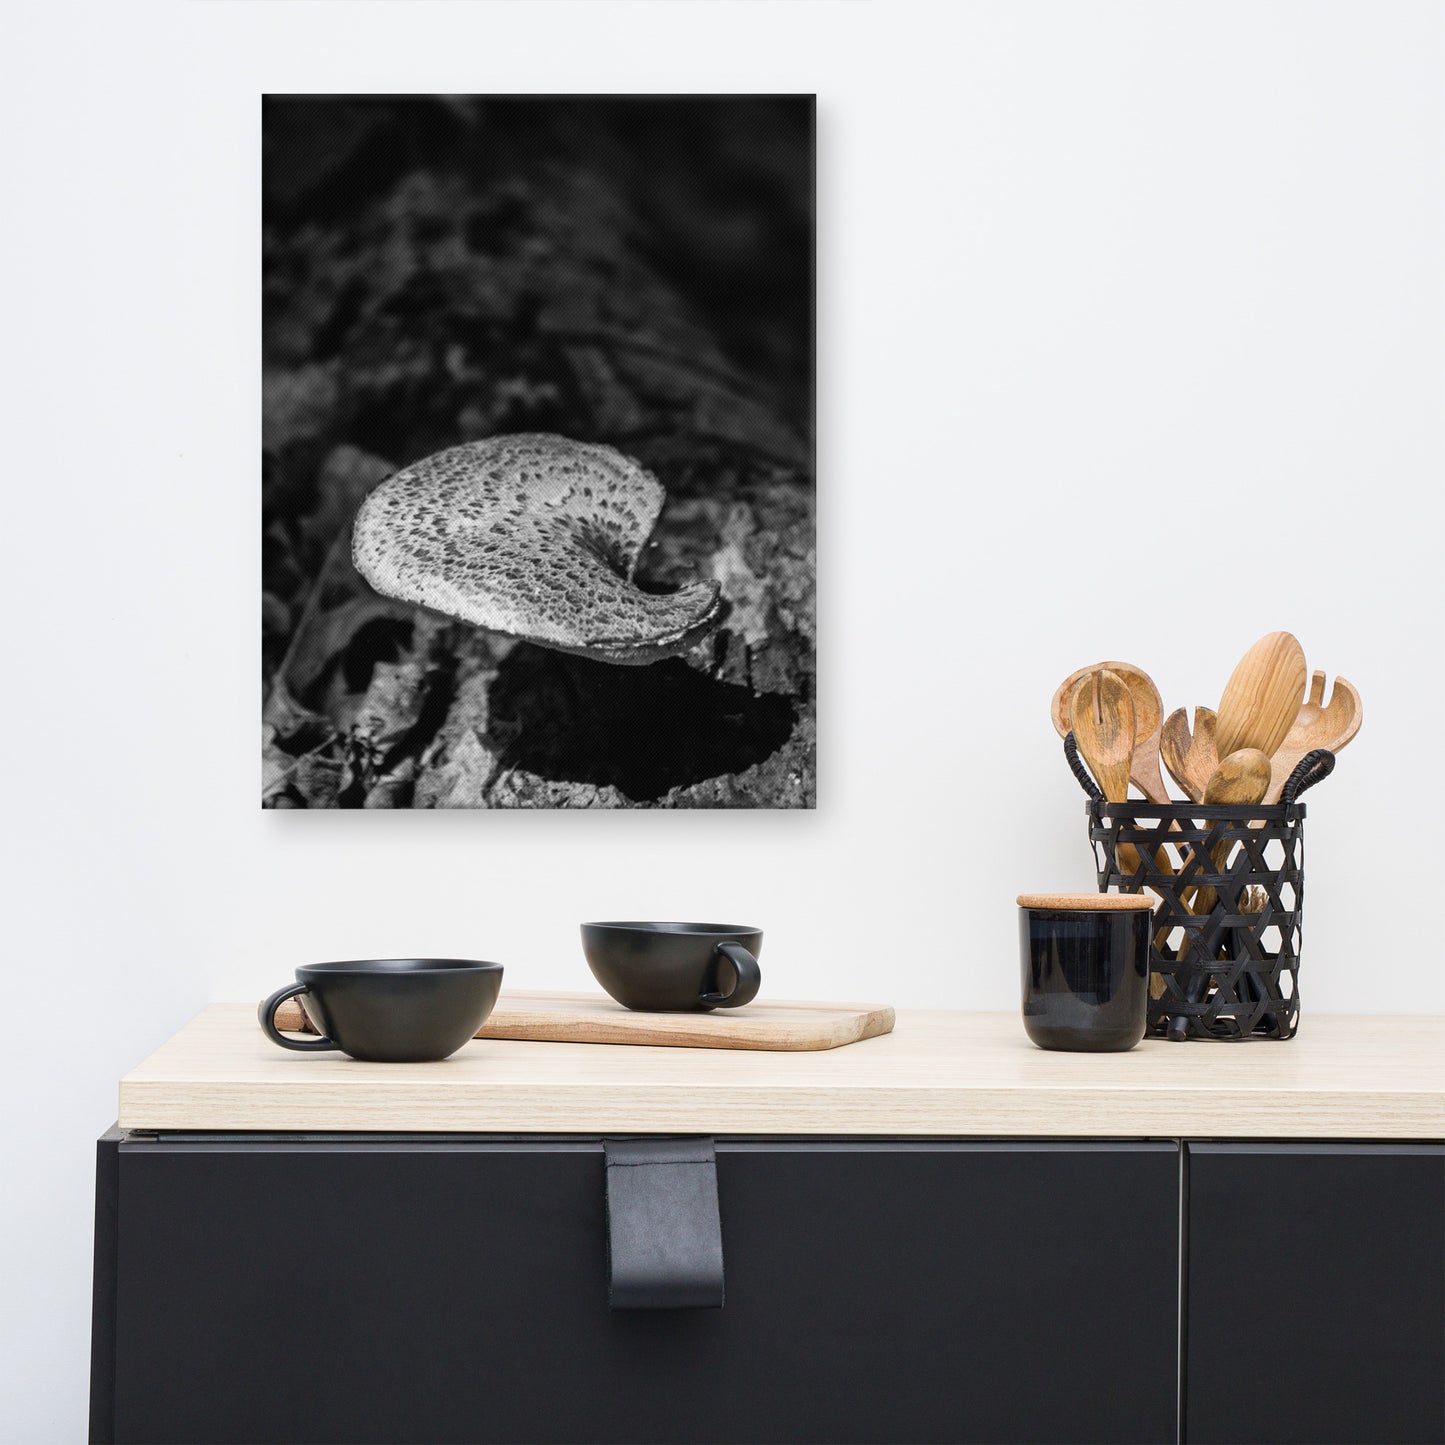 Art For Kitchen: Mushroom on Log Black and White Botanical Nature Canvas Wall Art Prints